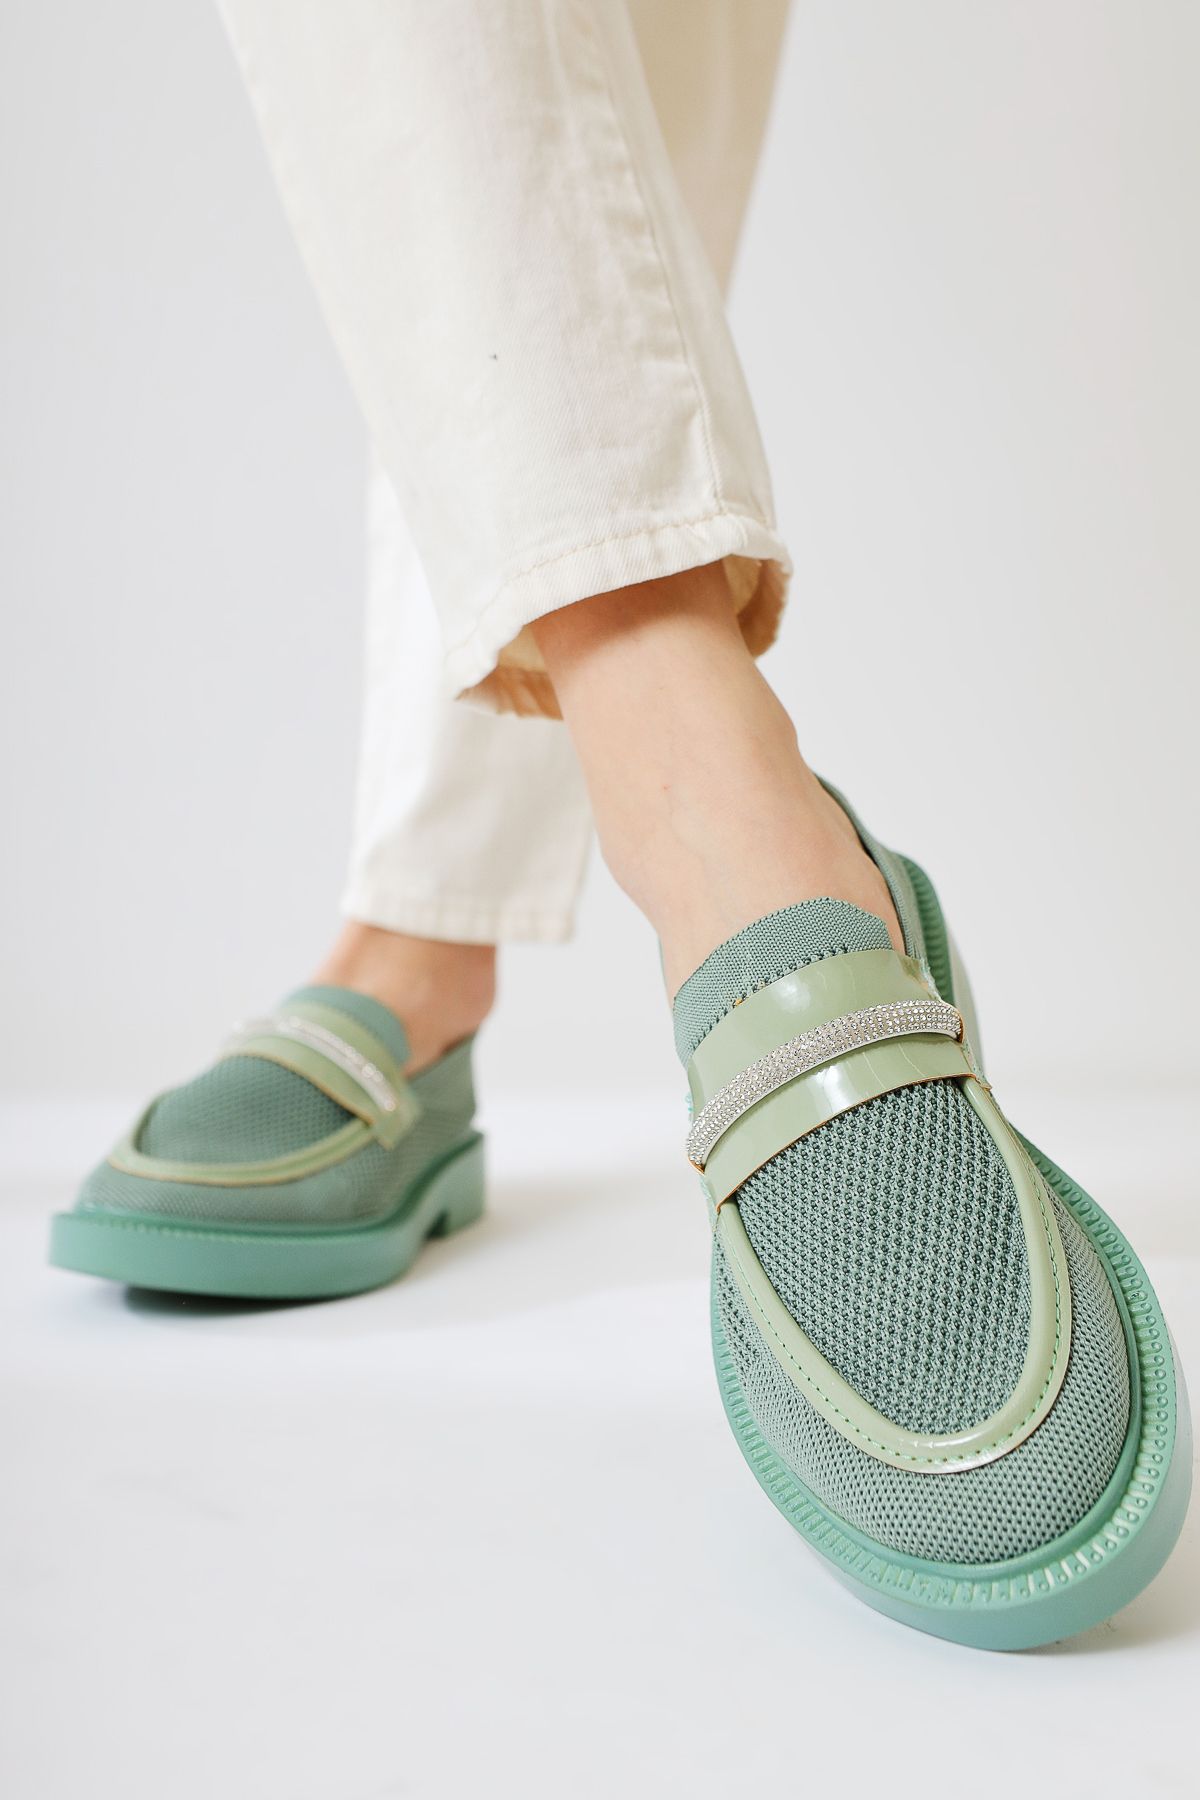 Limoya Micka Yeşil Örgü Rugan Detaylı Taş Bantlı Günlük Ayakkabı